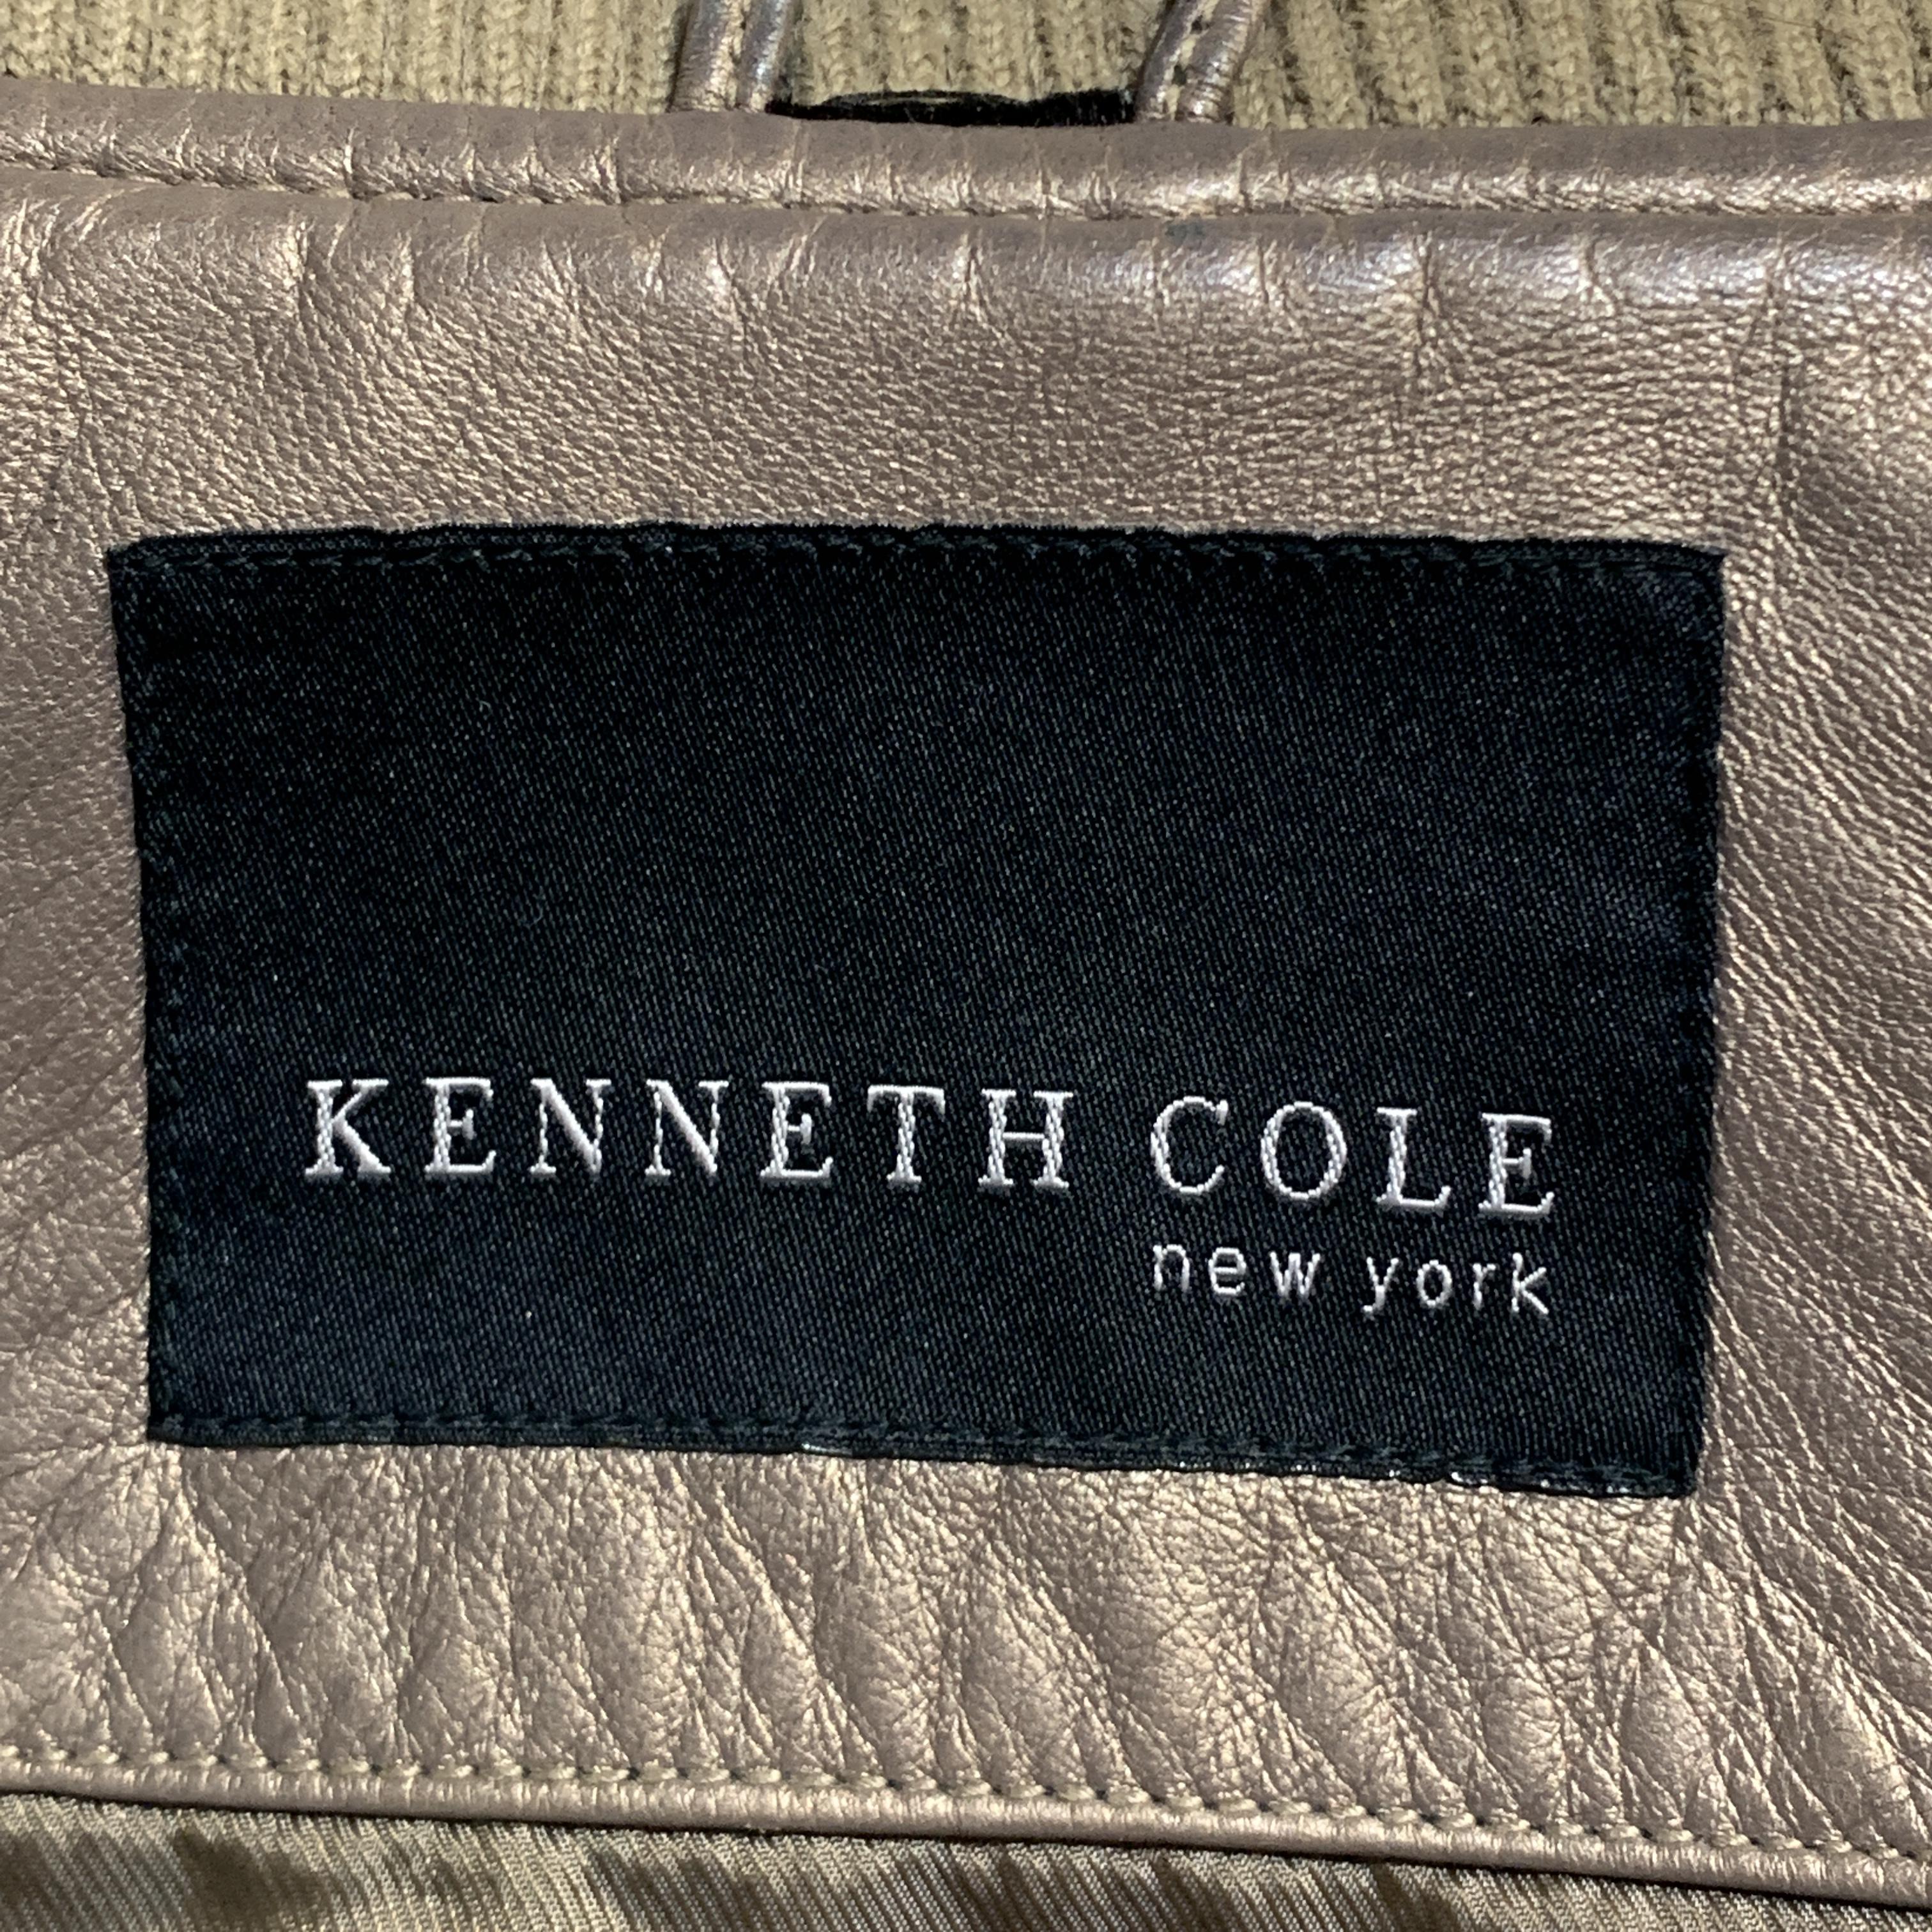 KENNETH COLE 42 Gold Metallic Leather Zip Up Vintage Bomber Style Jacket 1